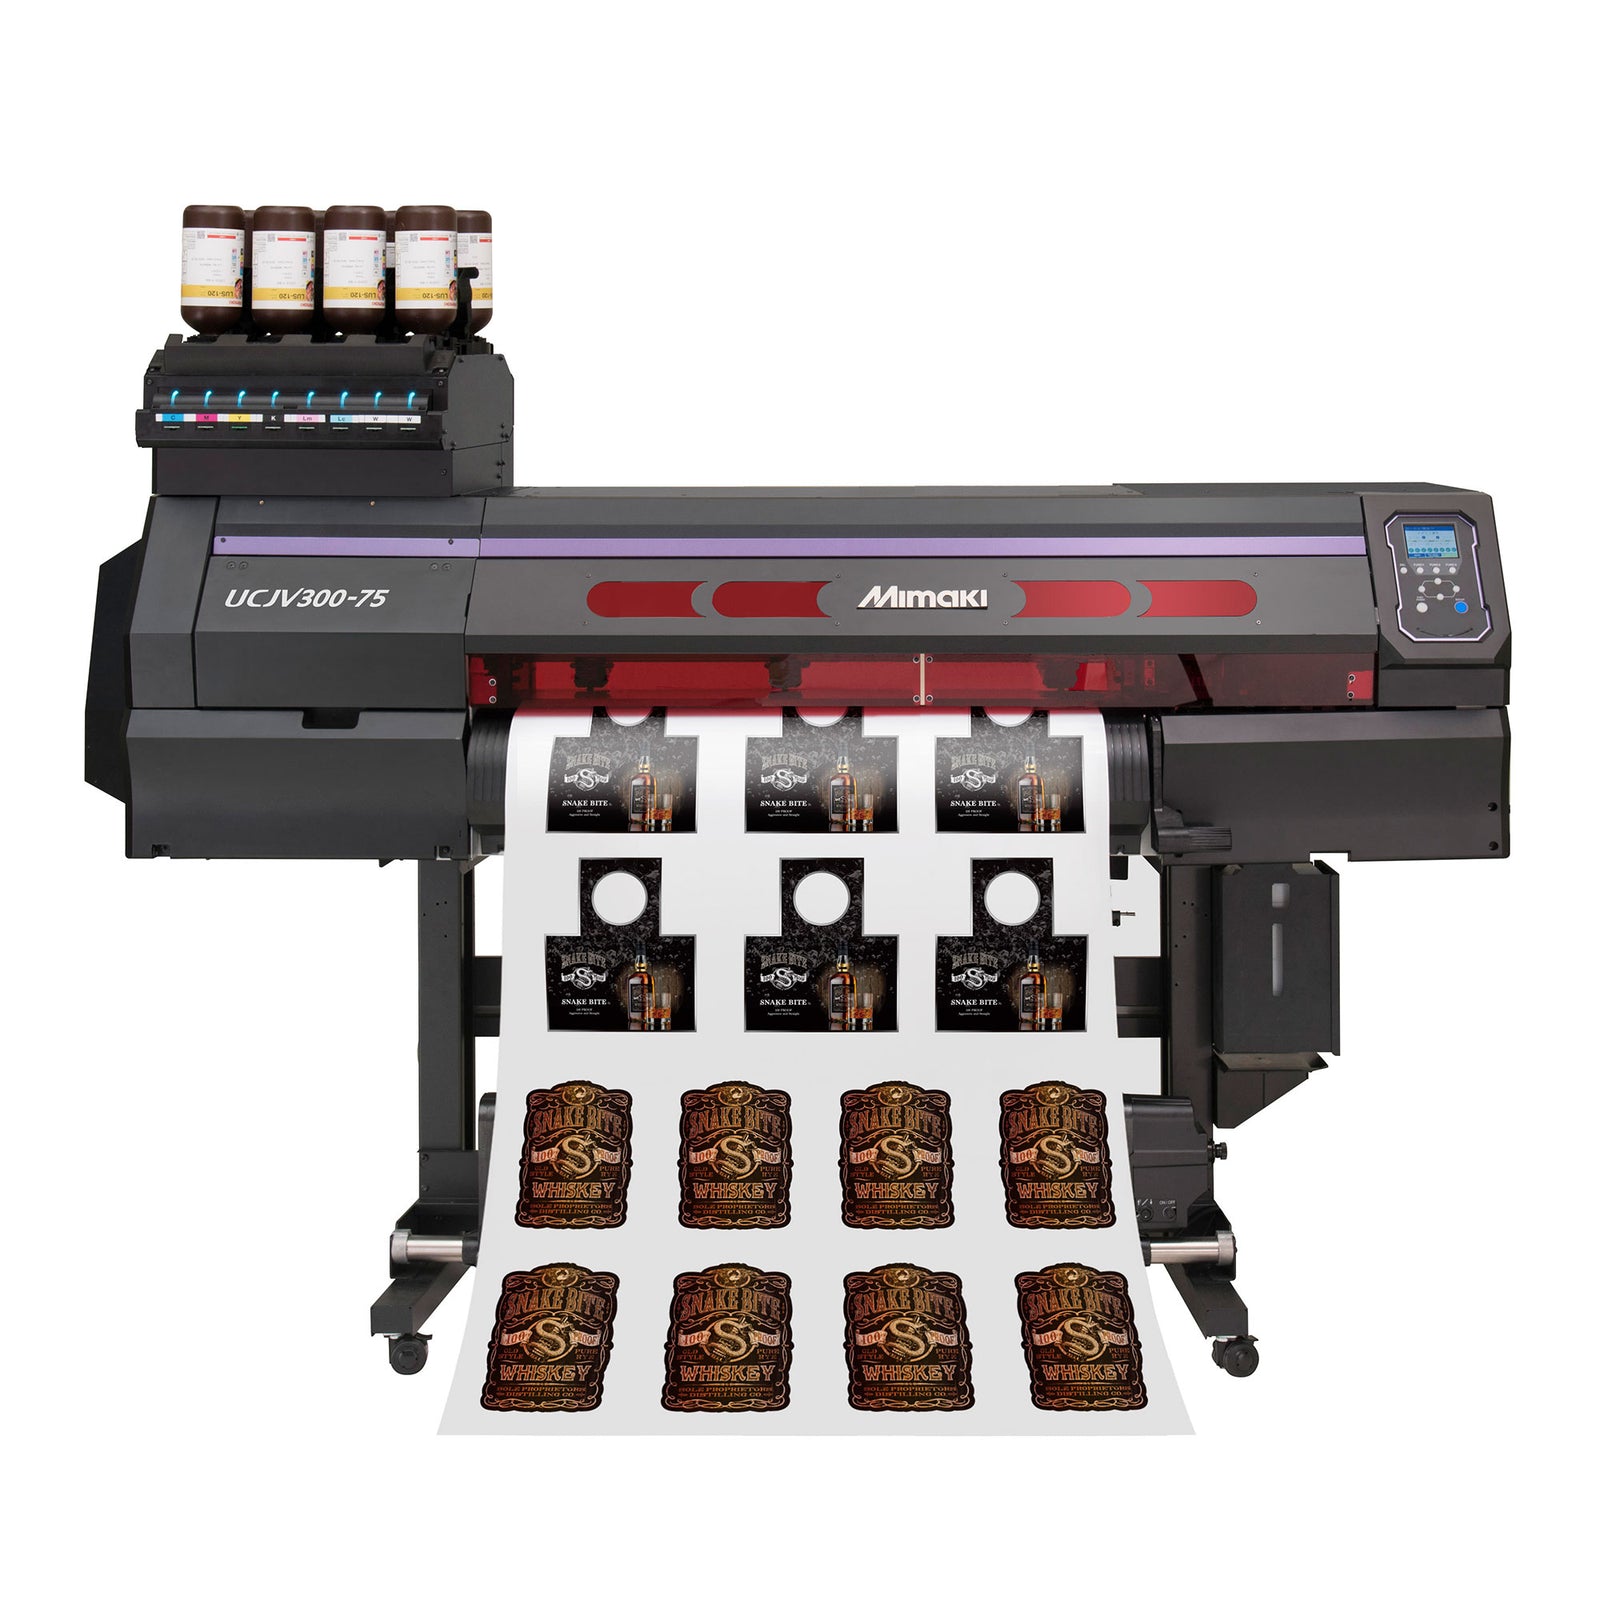 Mimaki UCJV300-75 Printer / Cutter